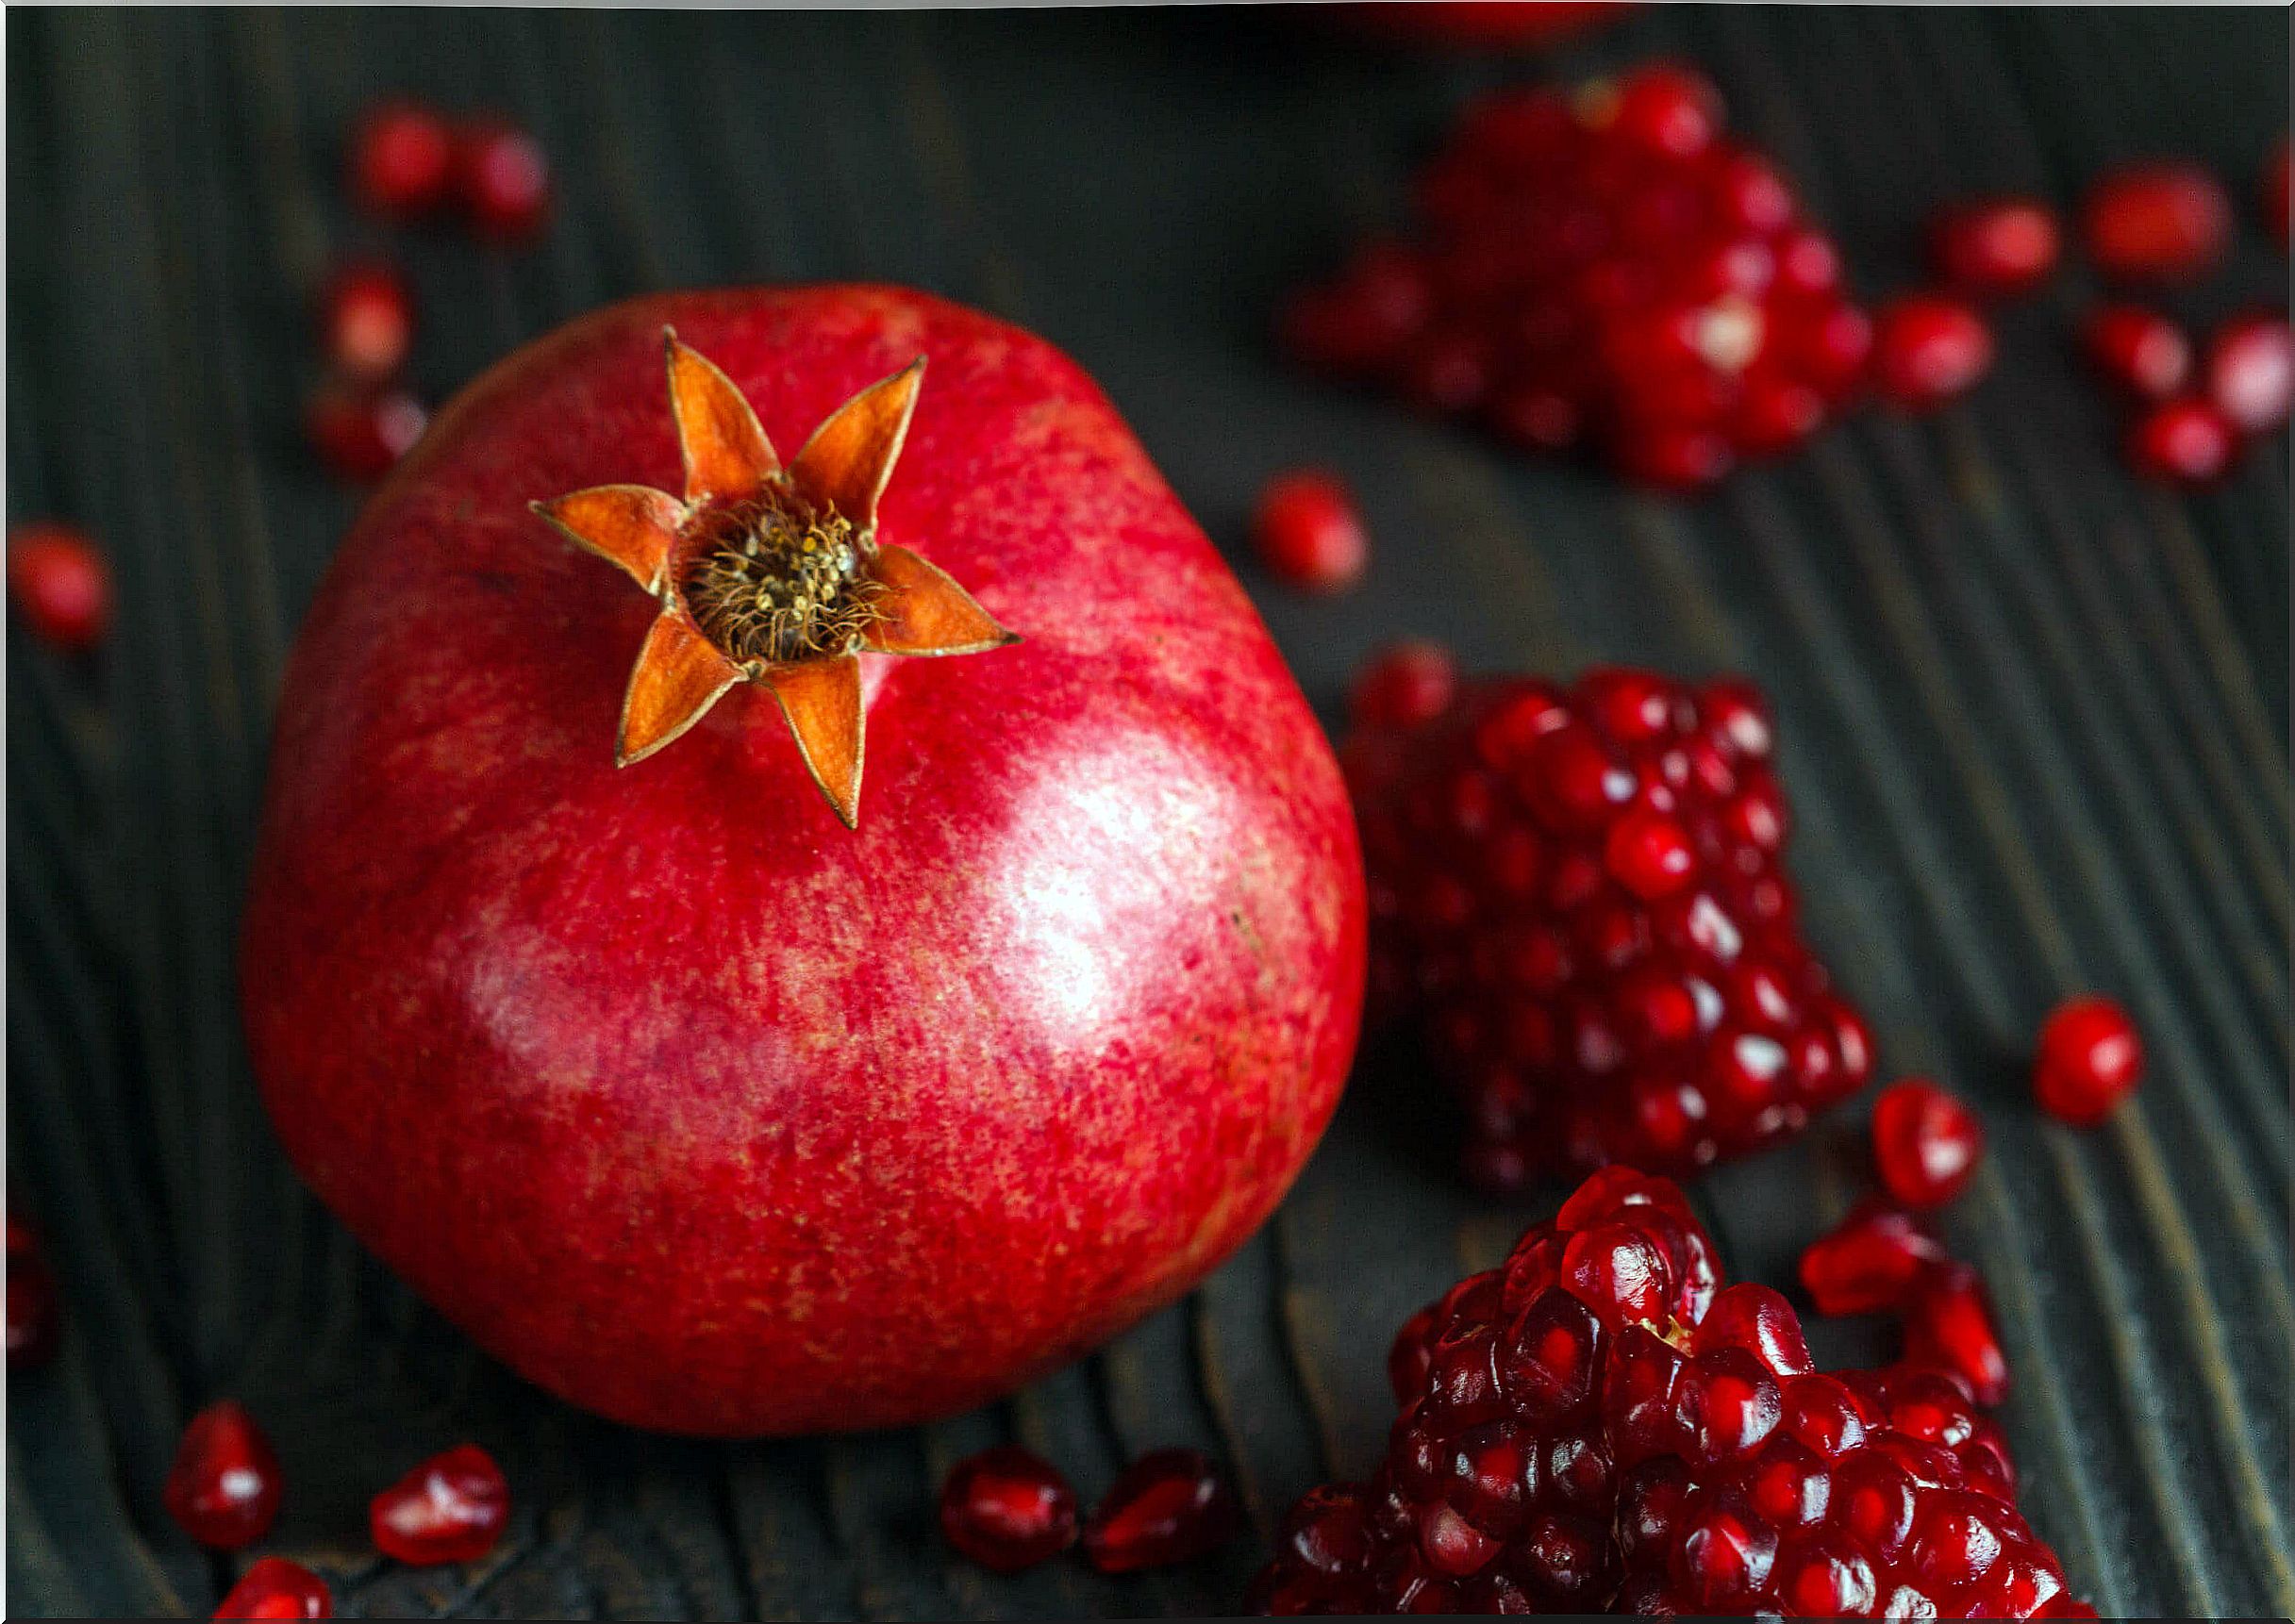 Pomegranate is an excellent antioxidant fruit.